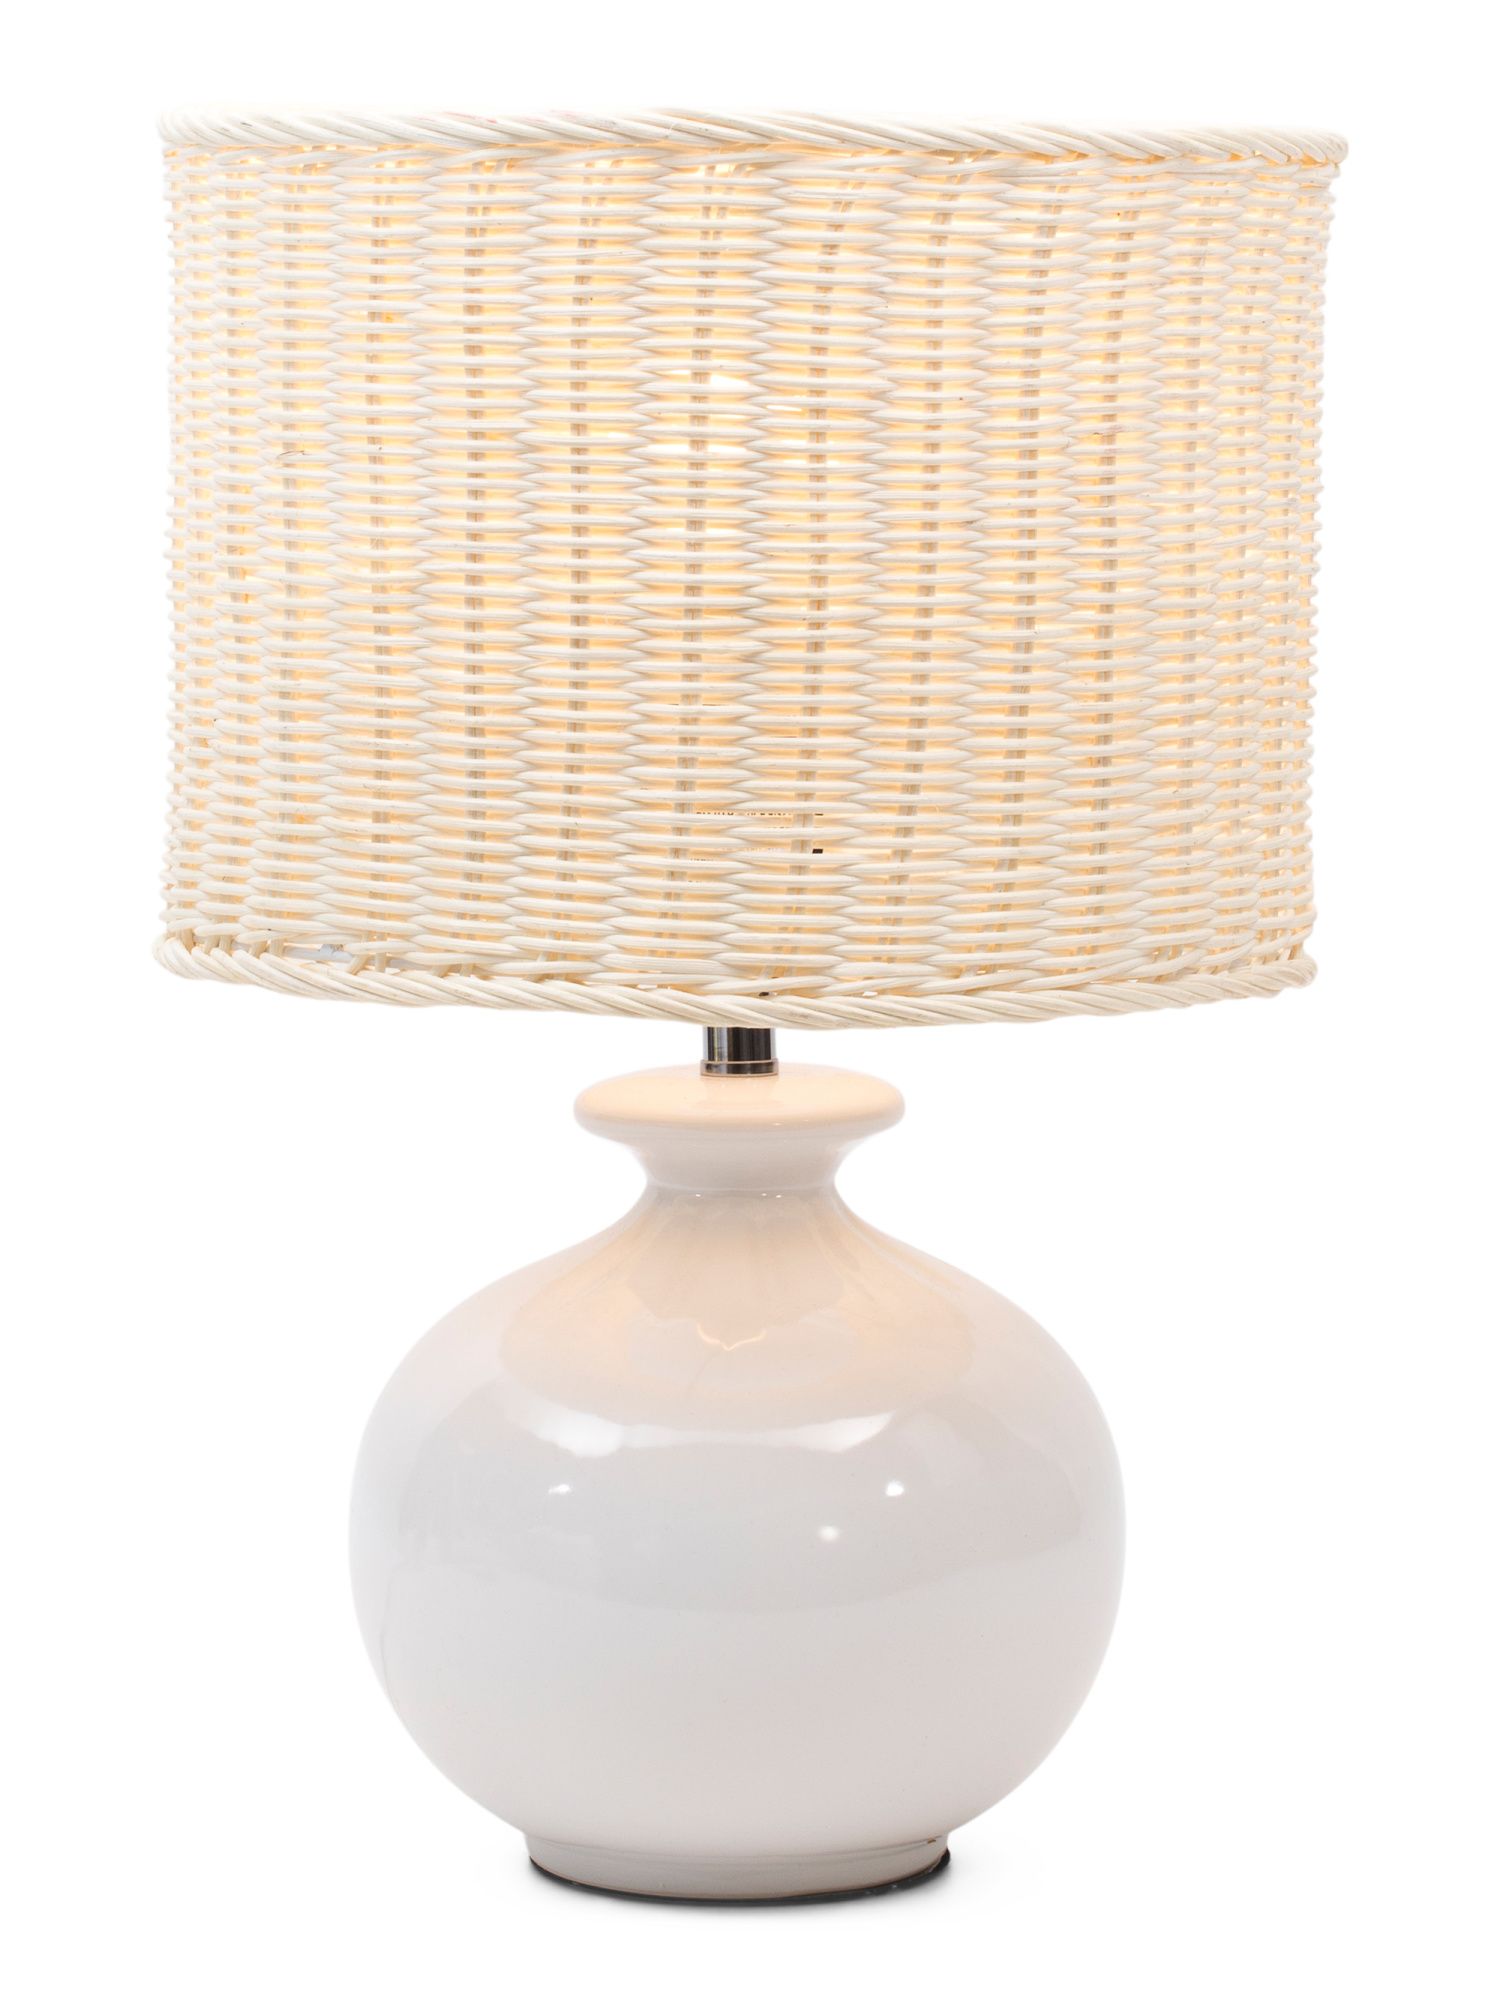 Round Ceramic Lamp With Rattan Shade | TJ Maxx